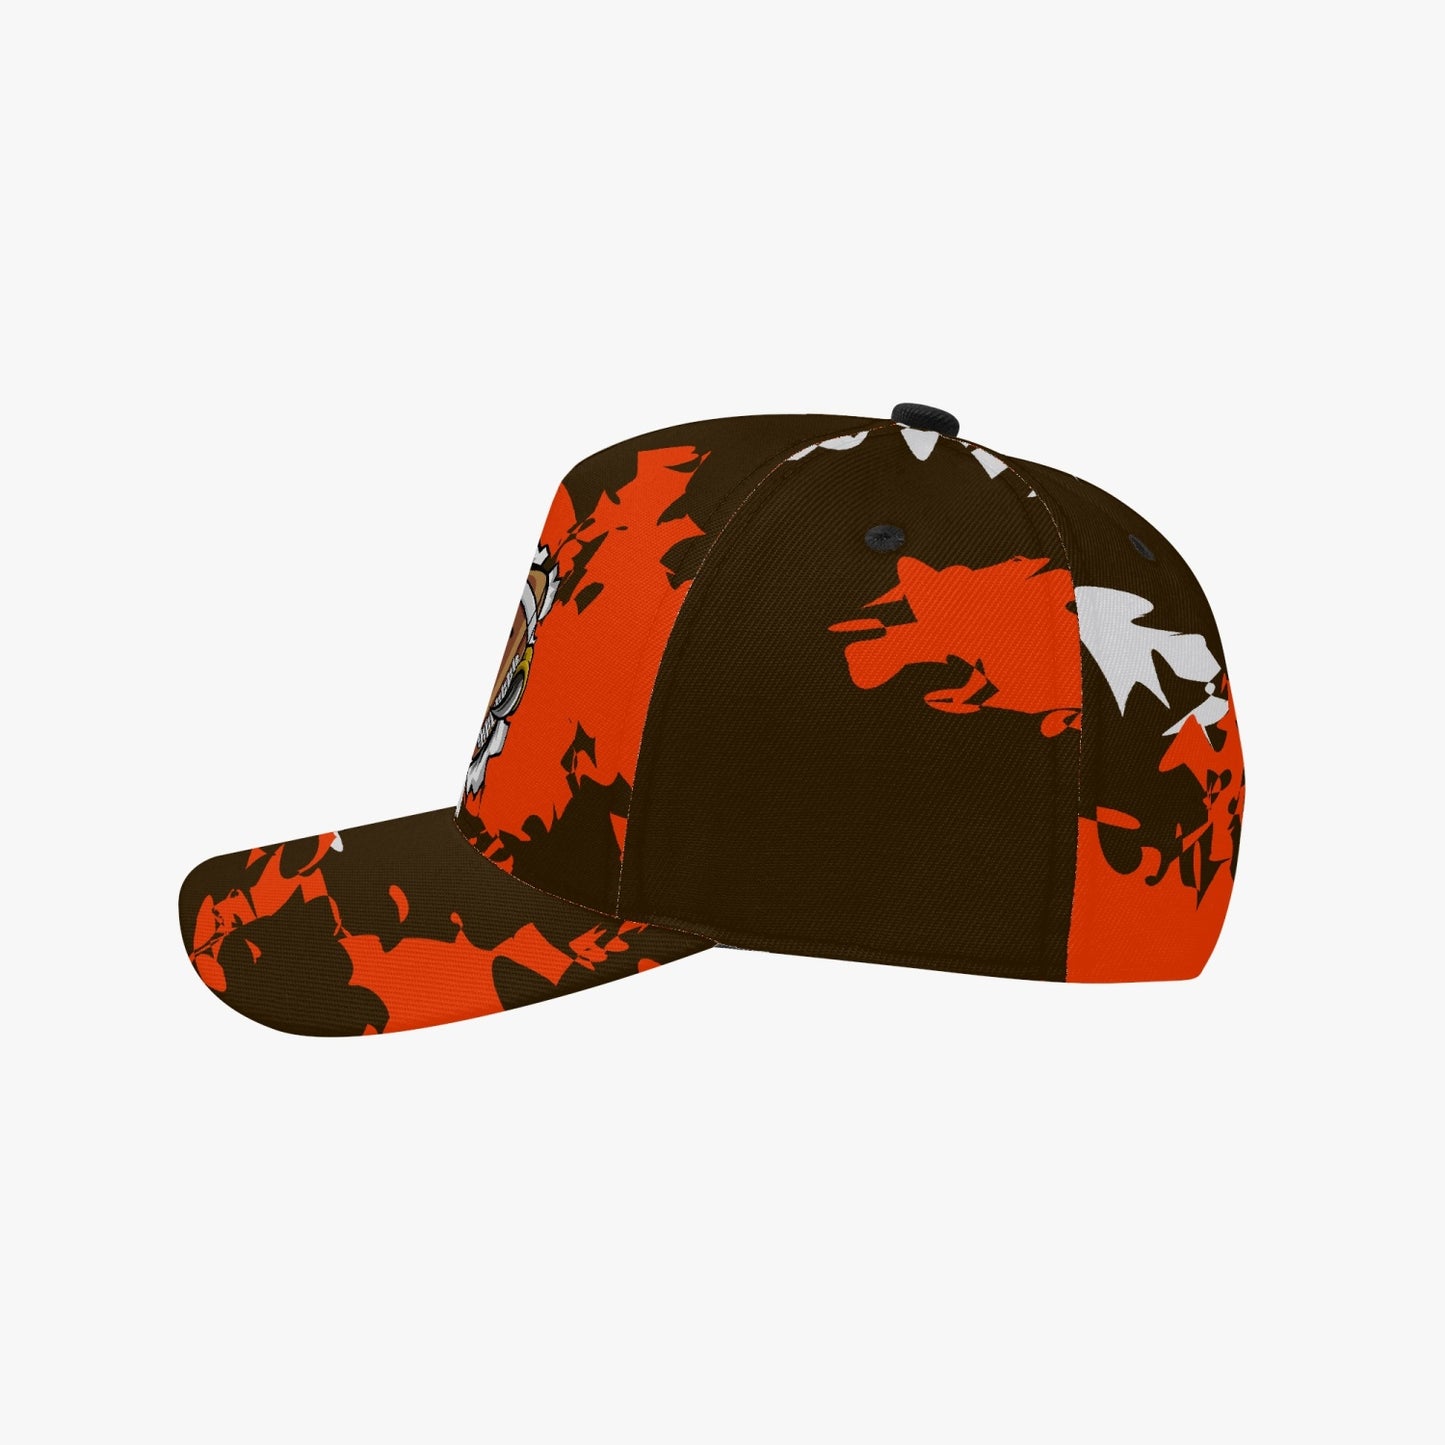 Kicxs Browns Camouflage Cap